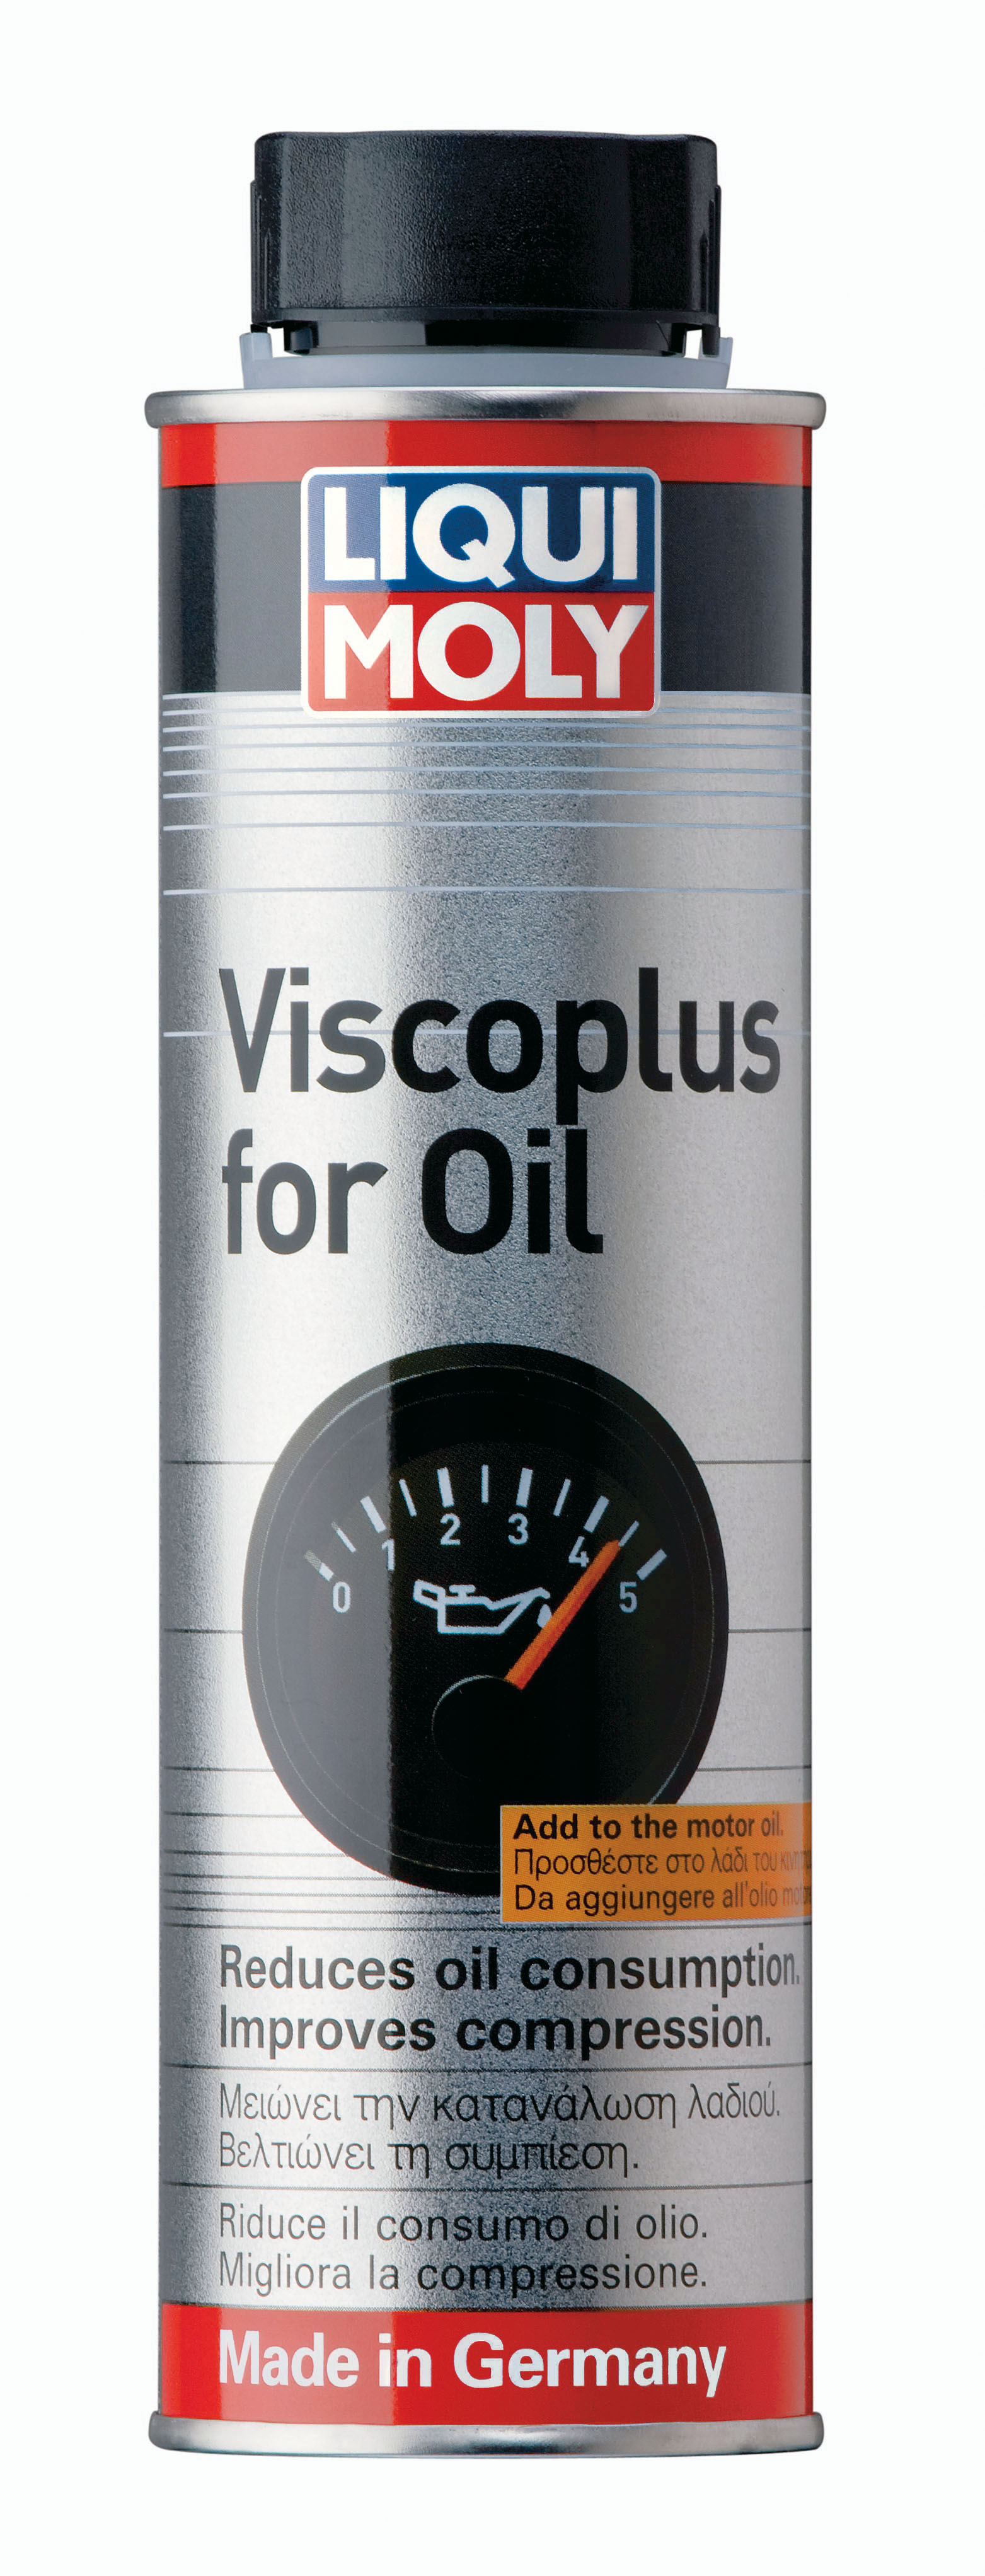 LIQUI MOLY – Viscoplus for Oil 300 ml – JM Lubricentro